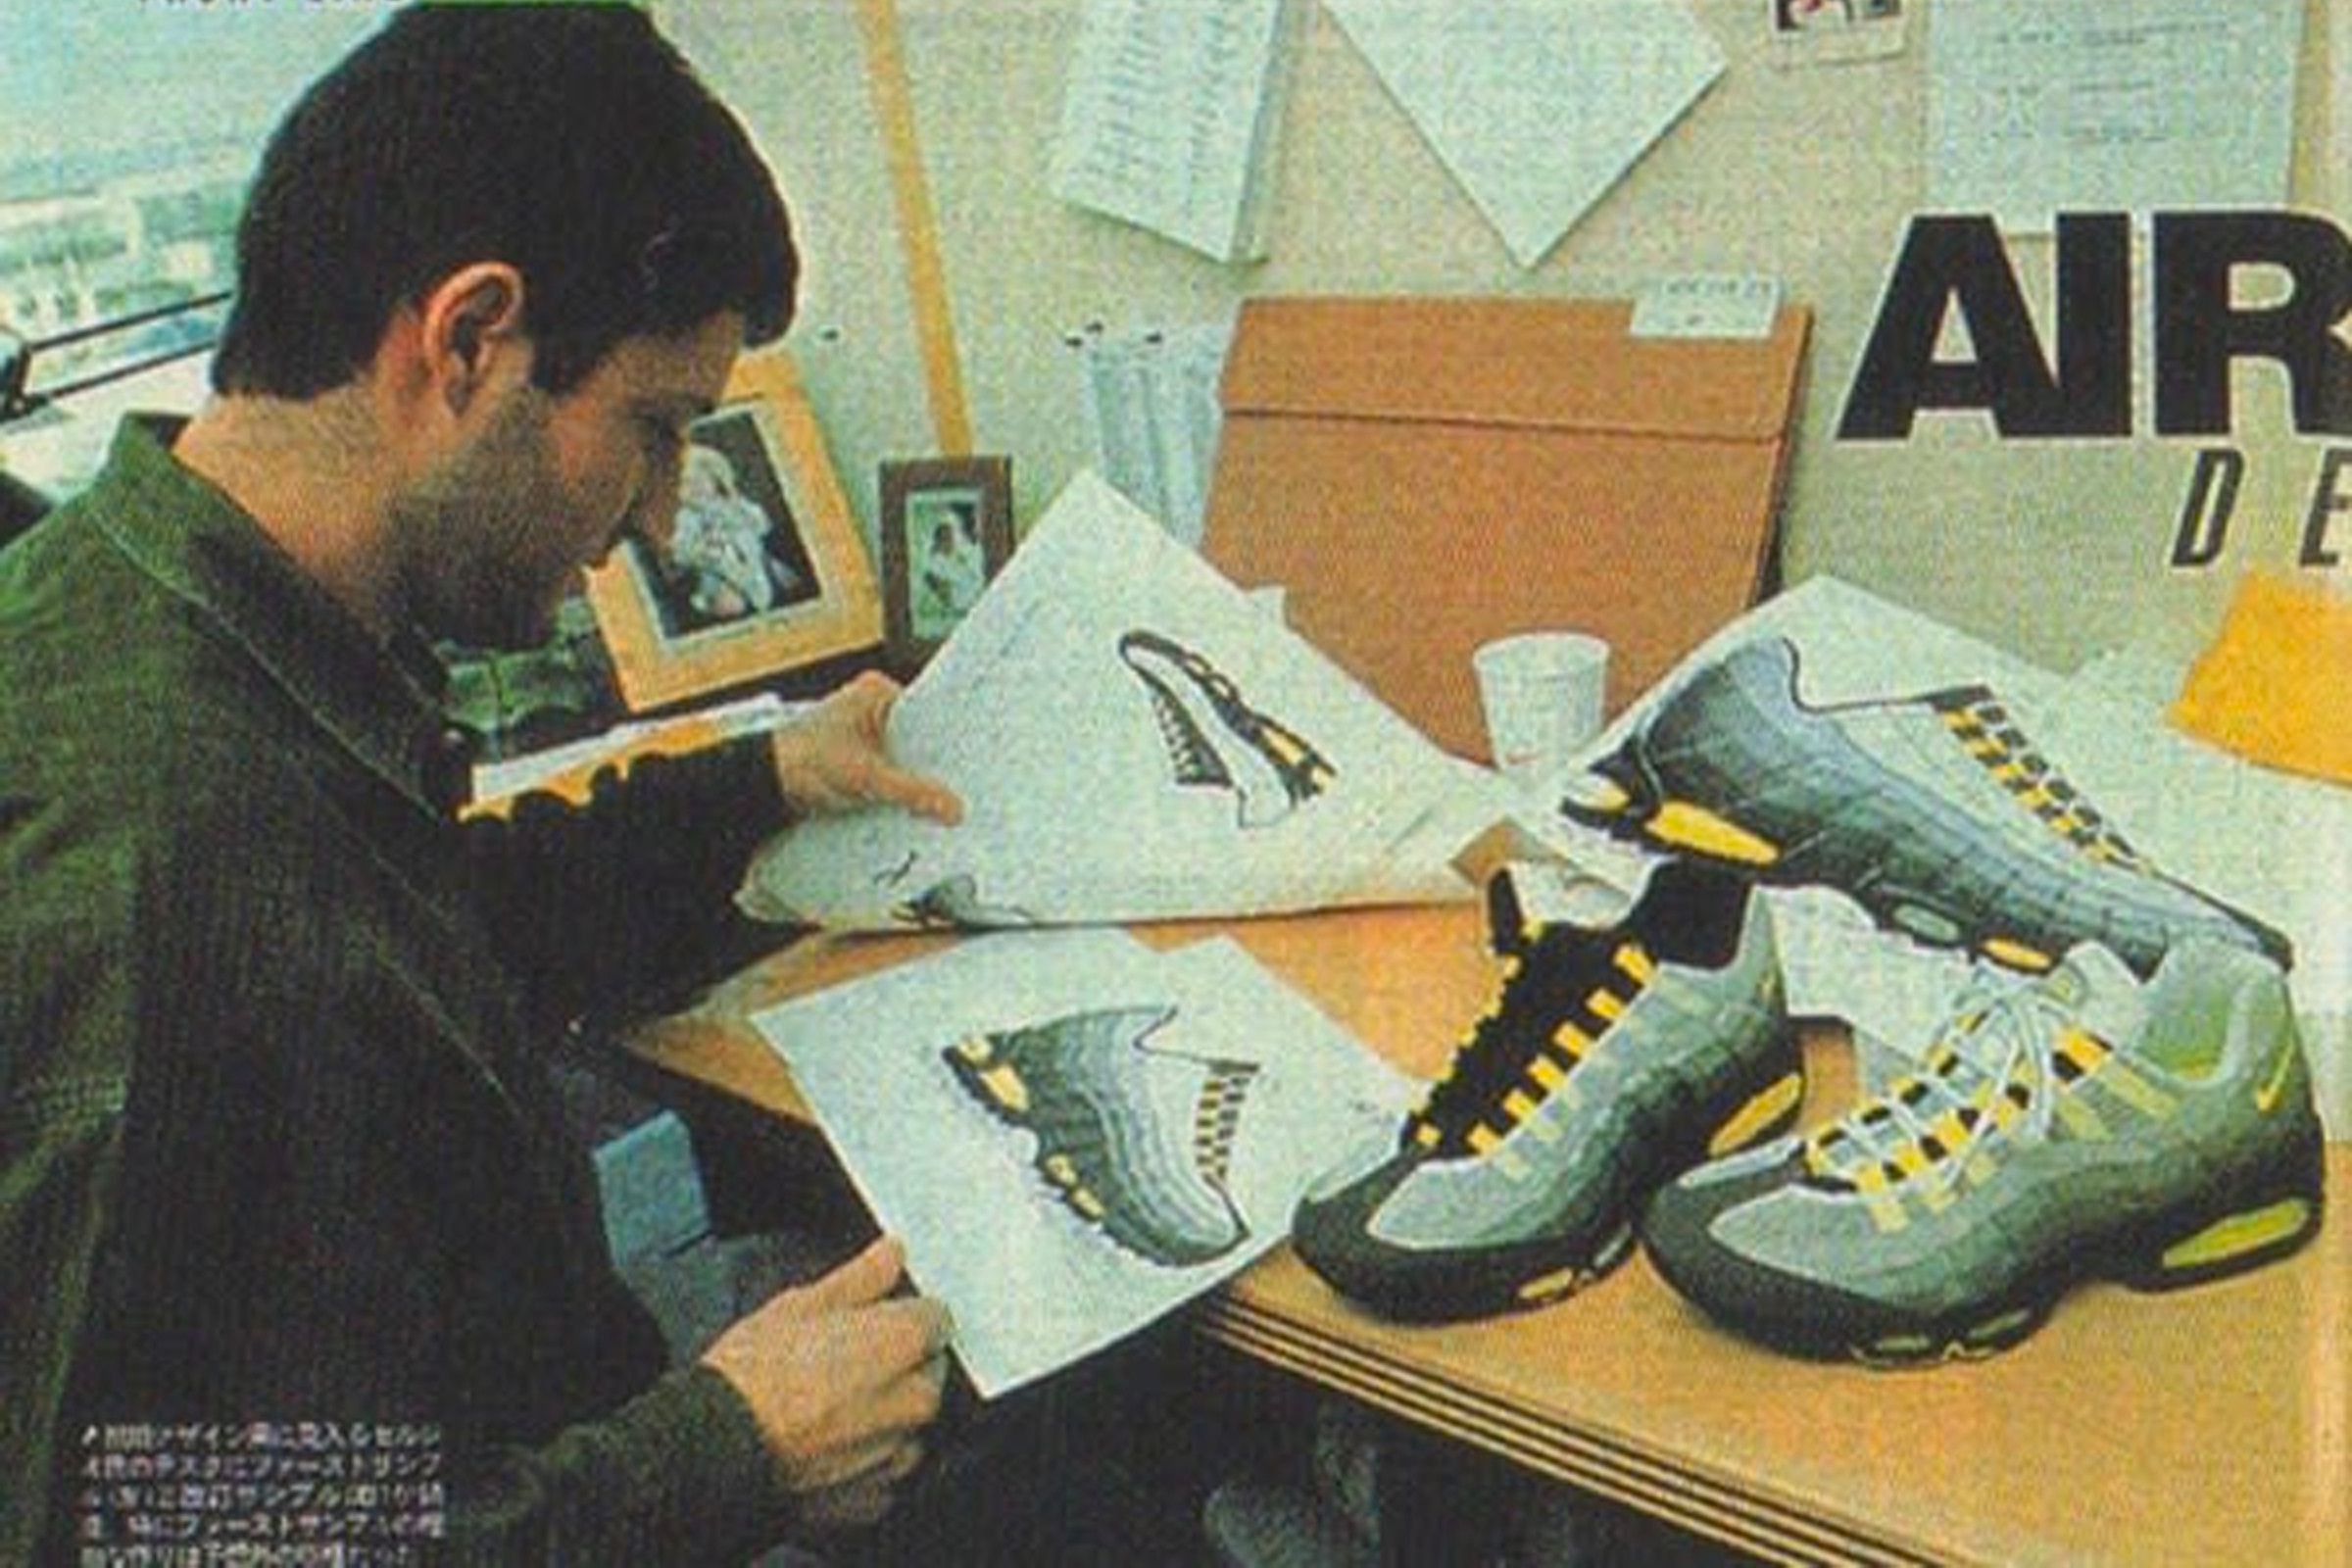 Designer Sergio Lozano working on the original Air Max 95 prototypes